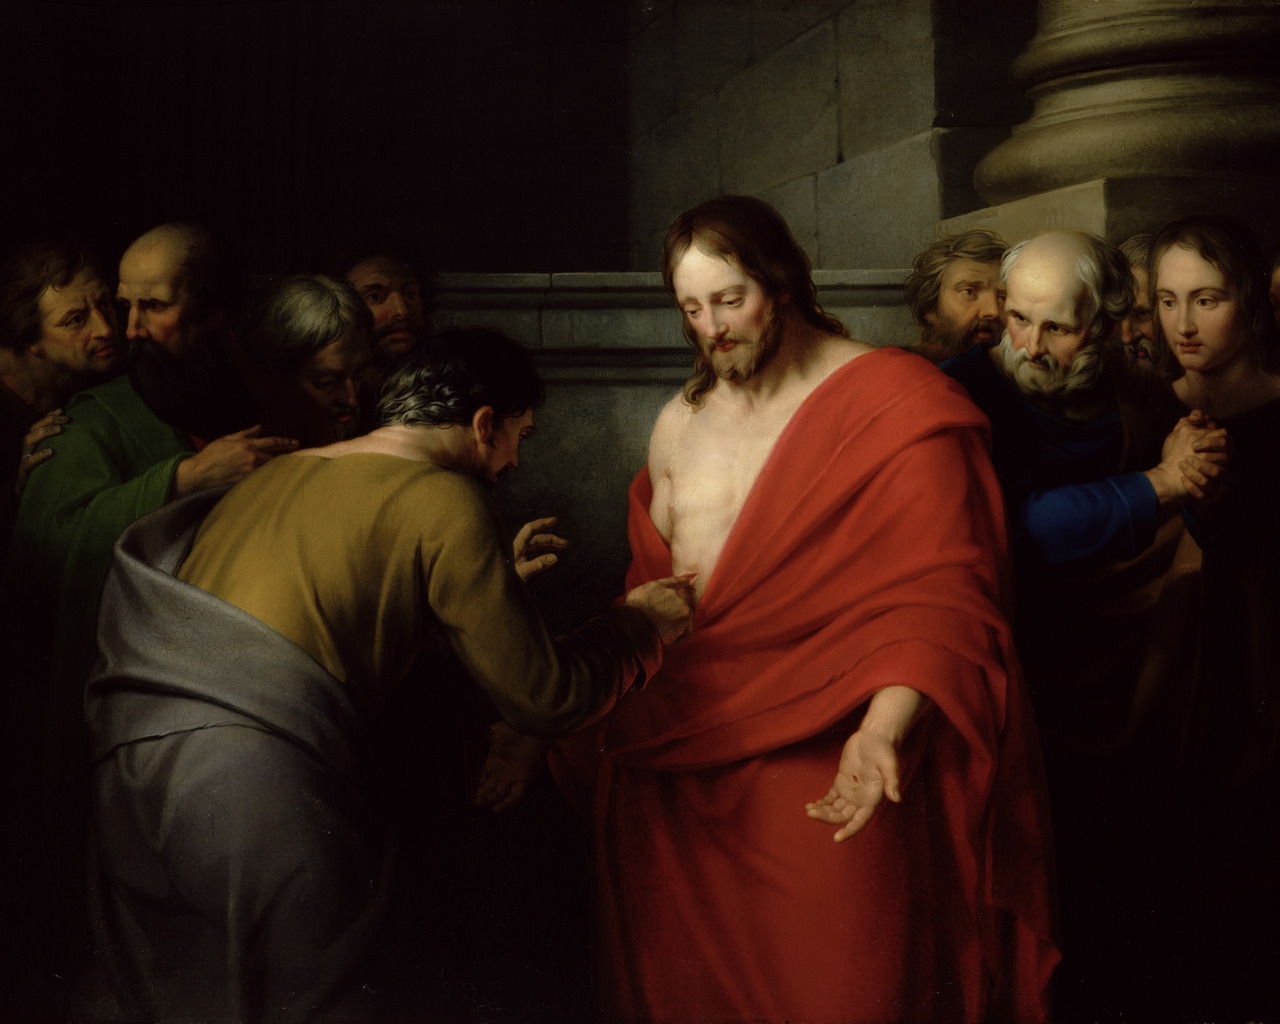 Jesus Scene for 1280 x 1024 resolution